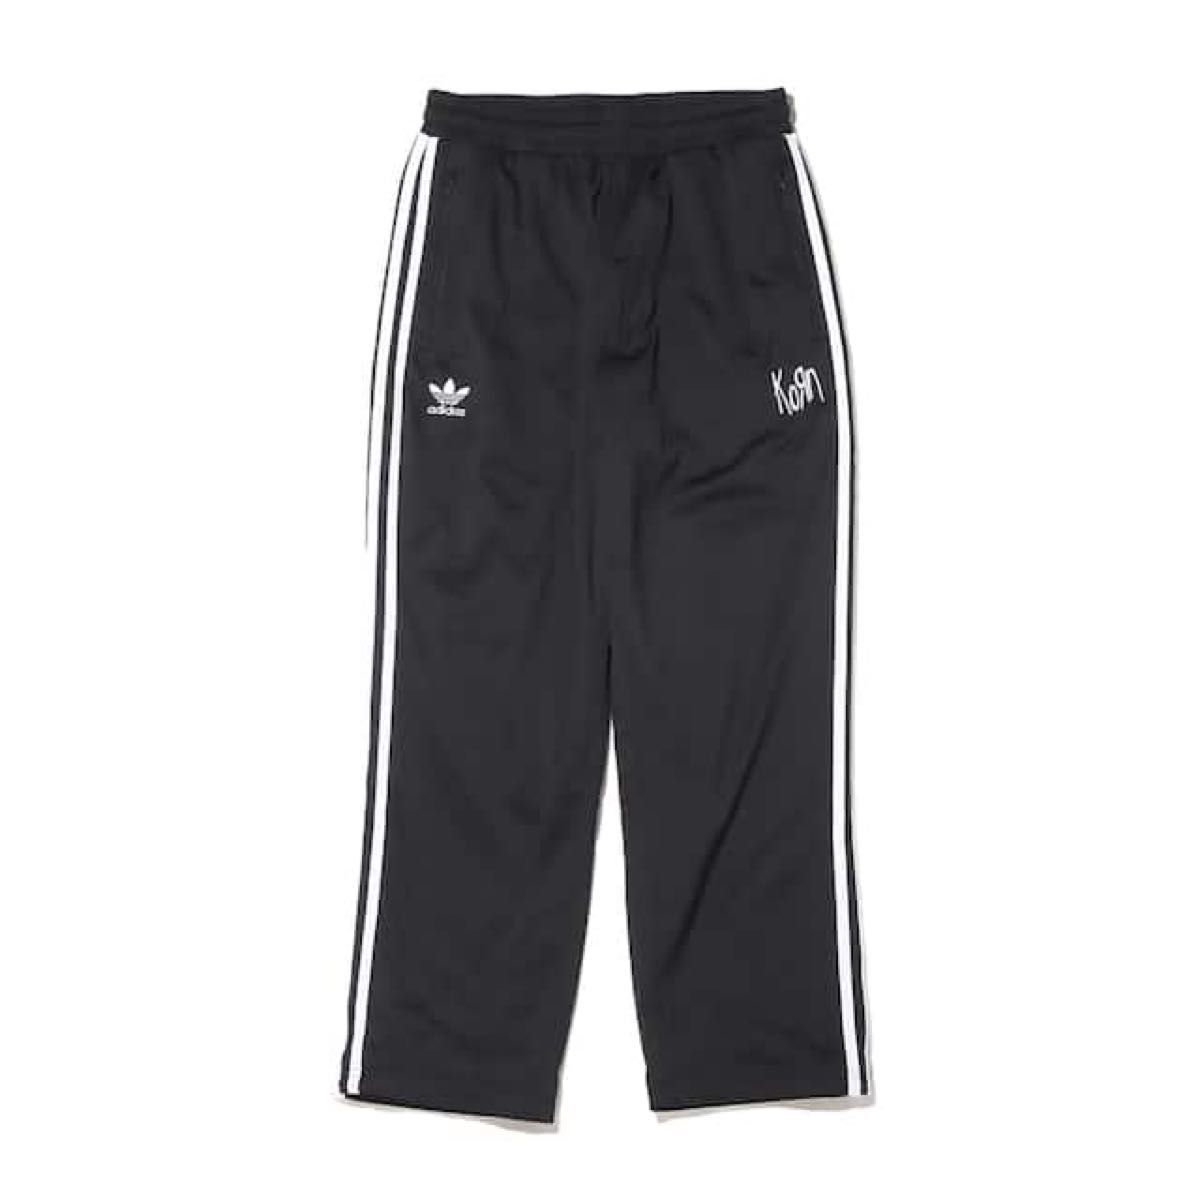 【 Black L 】adidas korn track pants トラックパンツ